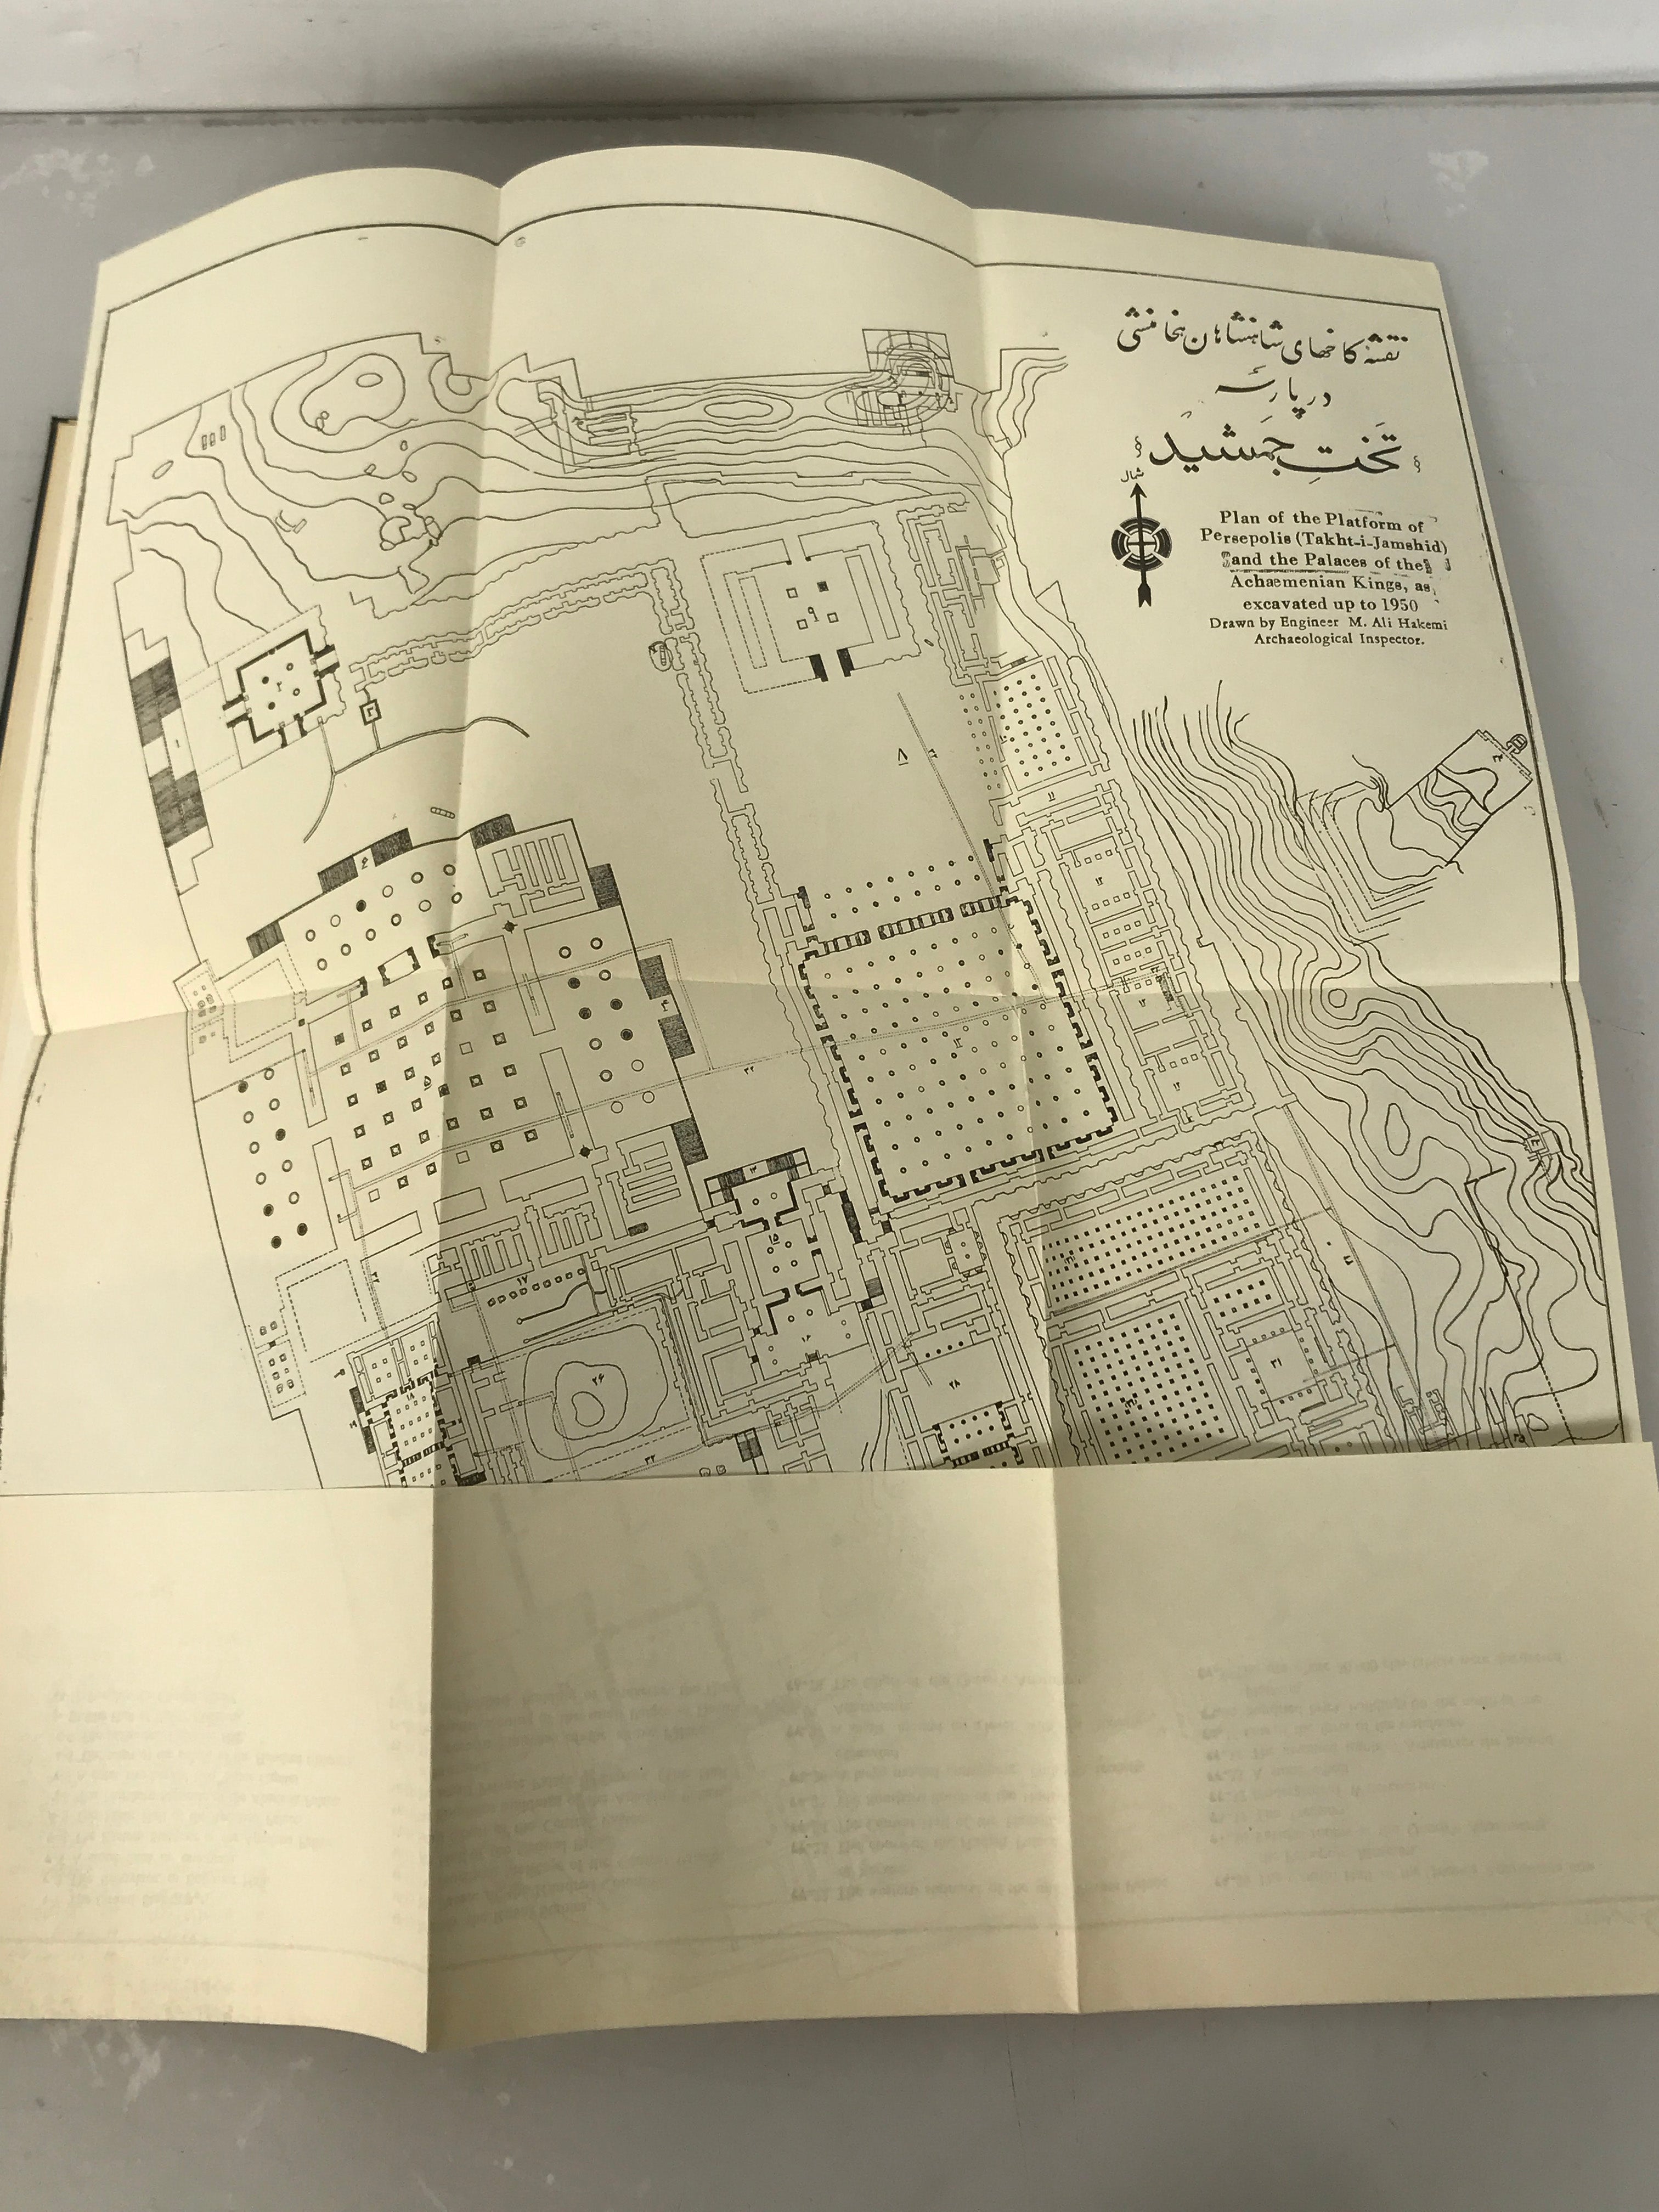 Persepolis (Takht-I-Jamshid) by Ali Sami 1955 Second Edition HC